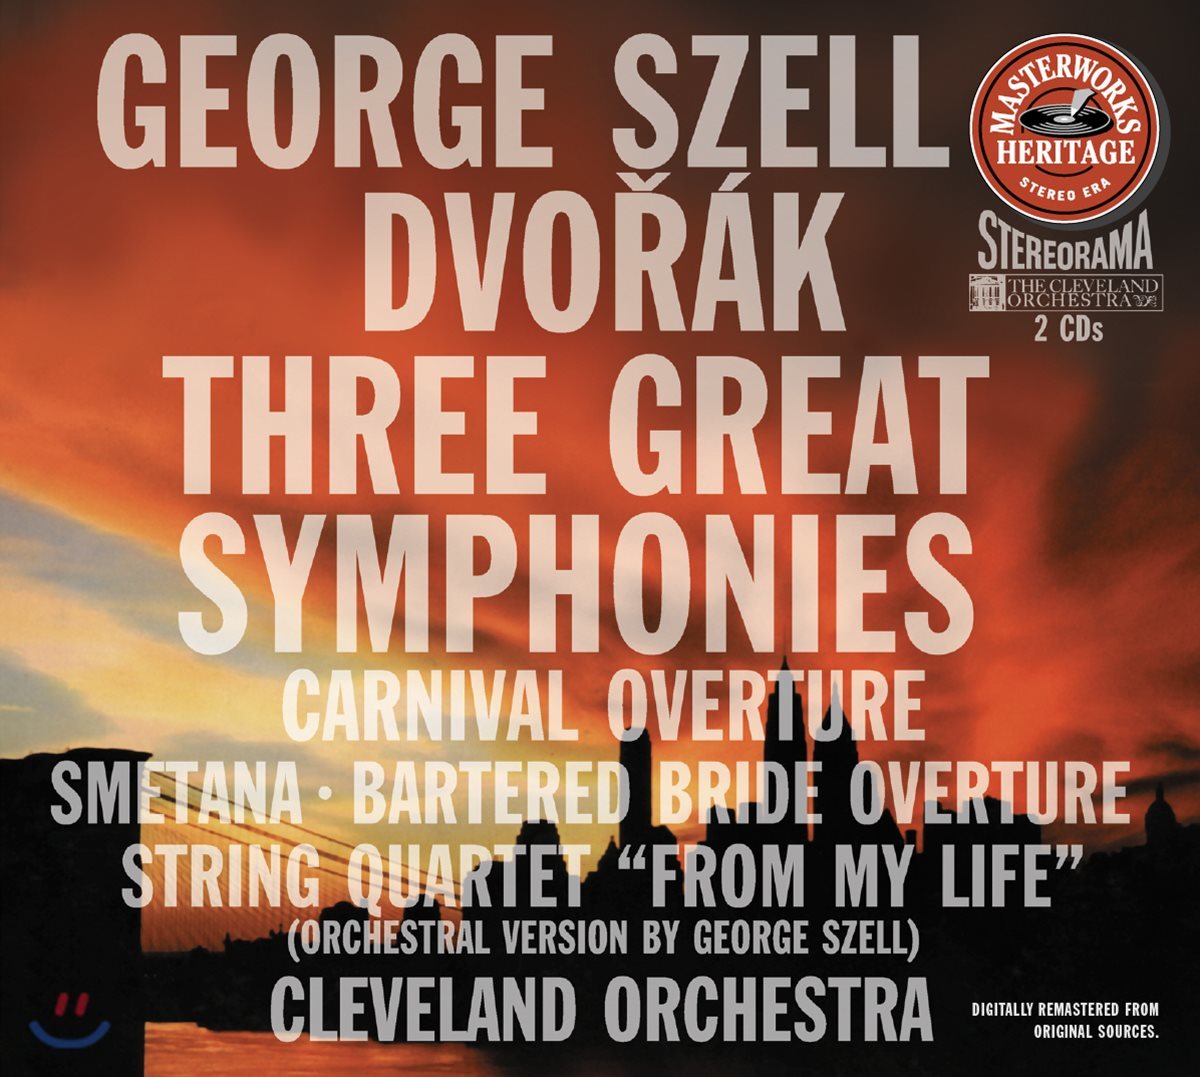 George Szell 드보르작: 교향곡 7, 8, 9번 (Masterworks Heritage - Dvorak: Three Great Symphonies)